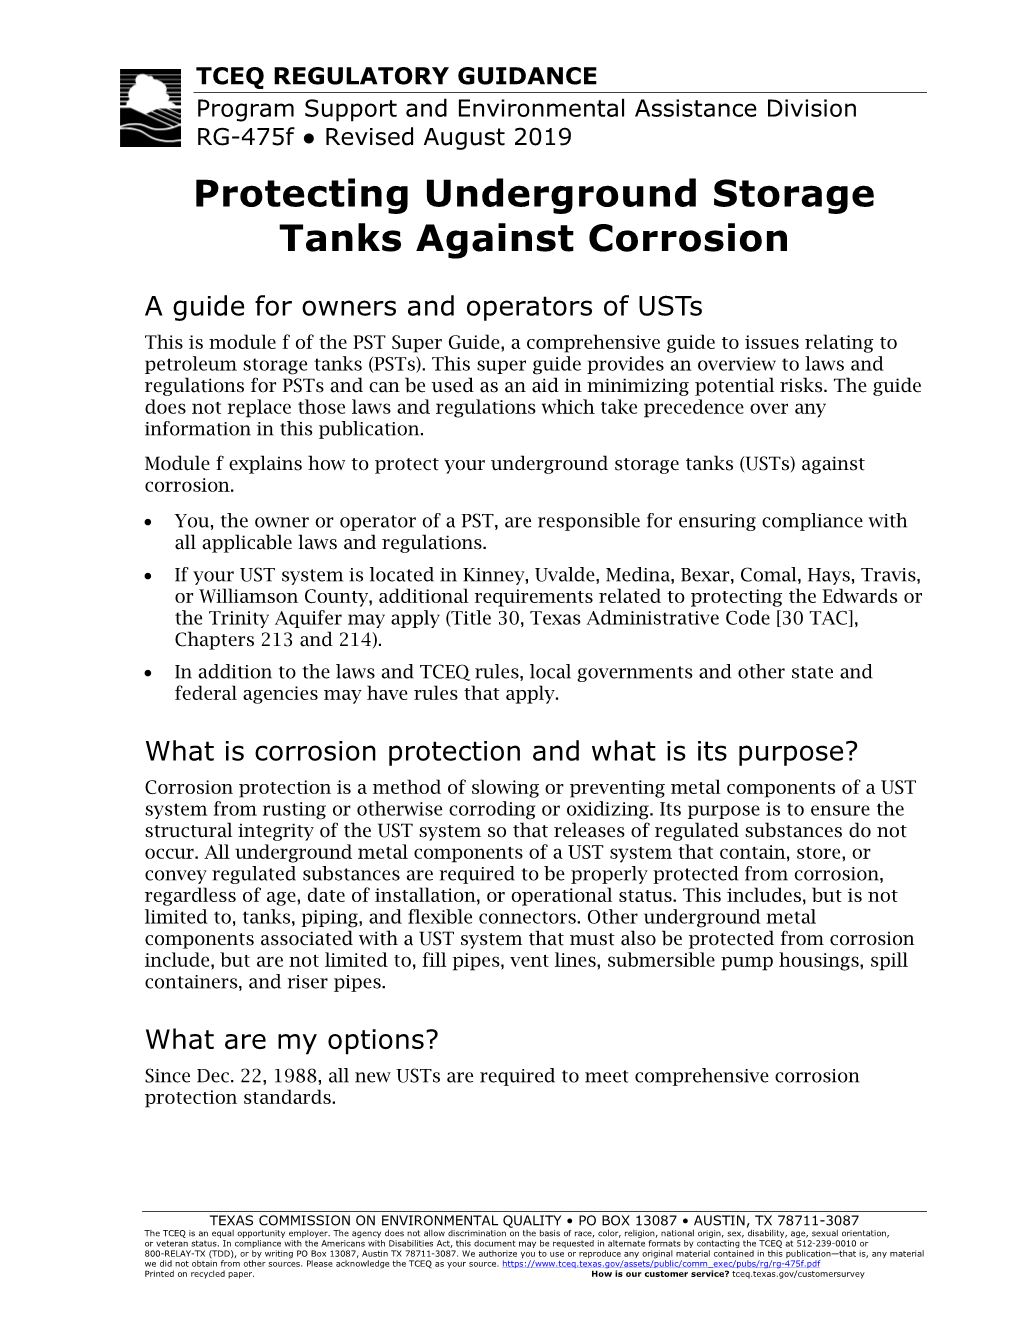 Protecting Underground Storage Tanks Against Corrosion